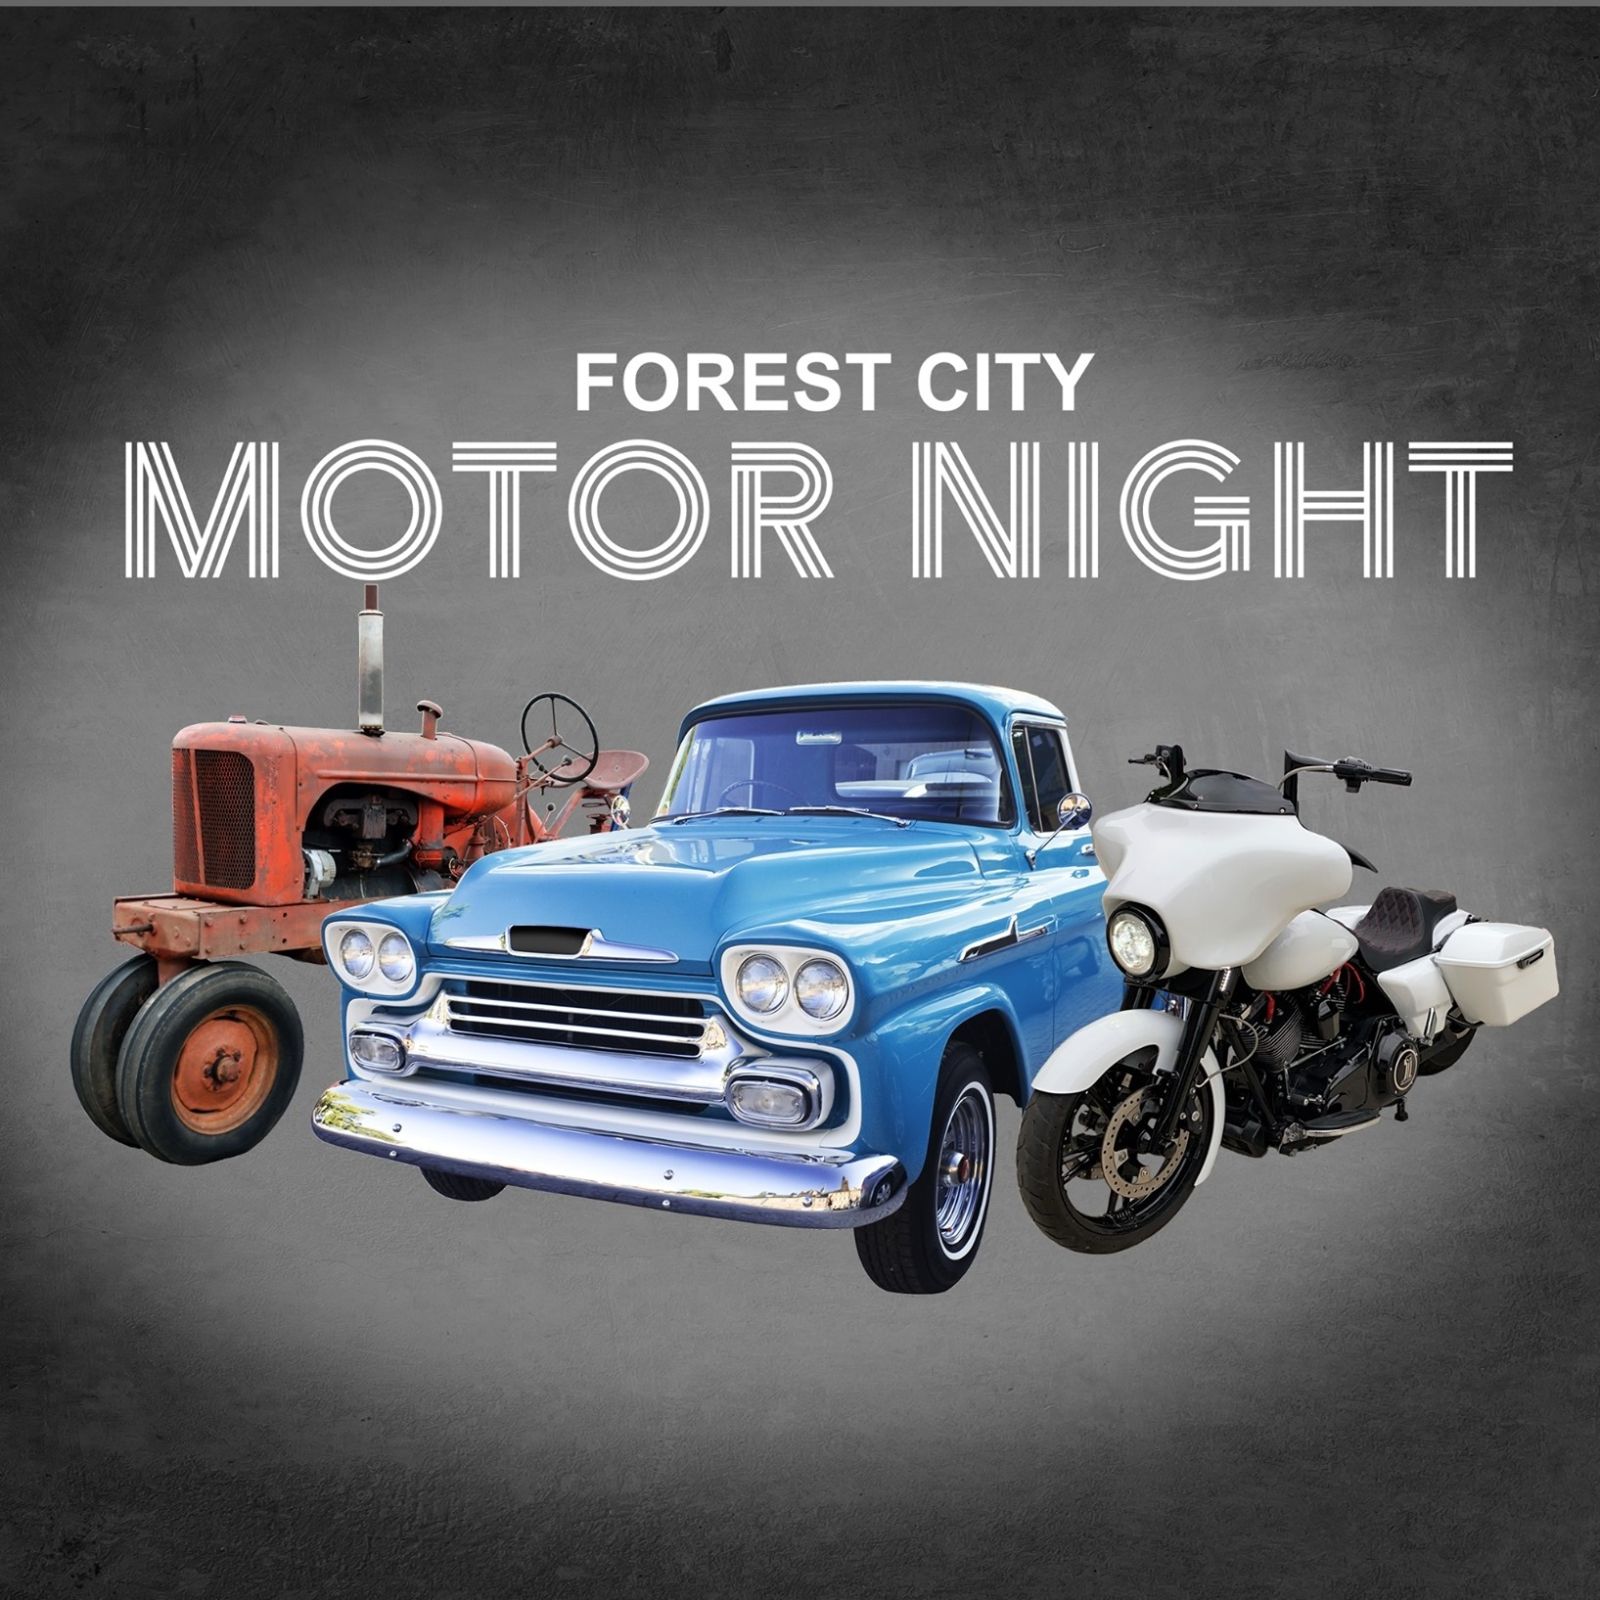 Forest City Motor Night Photo